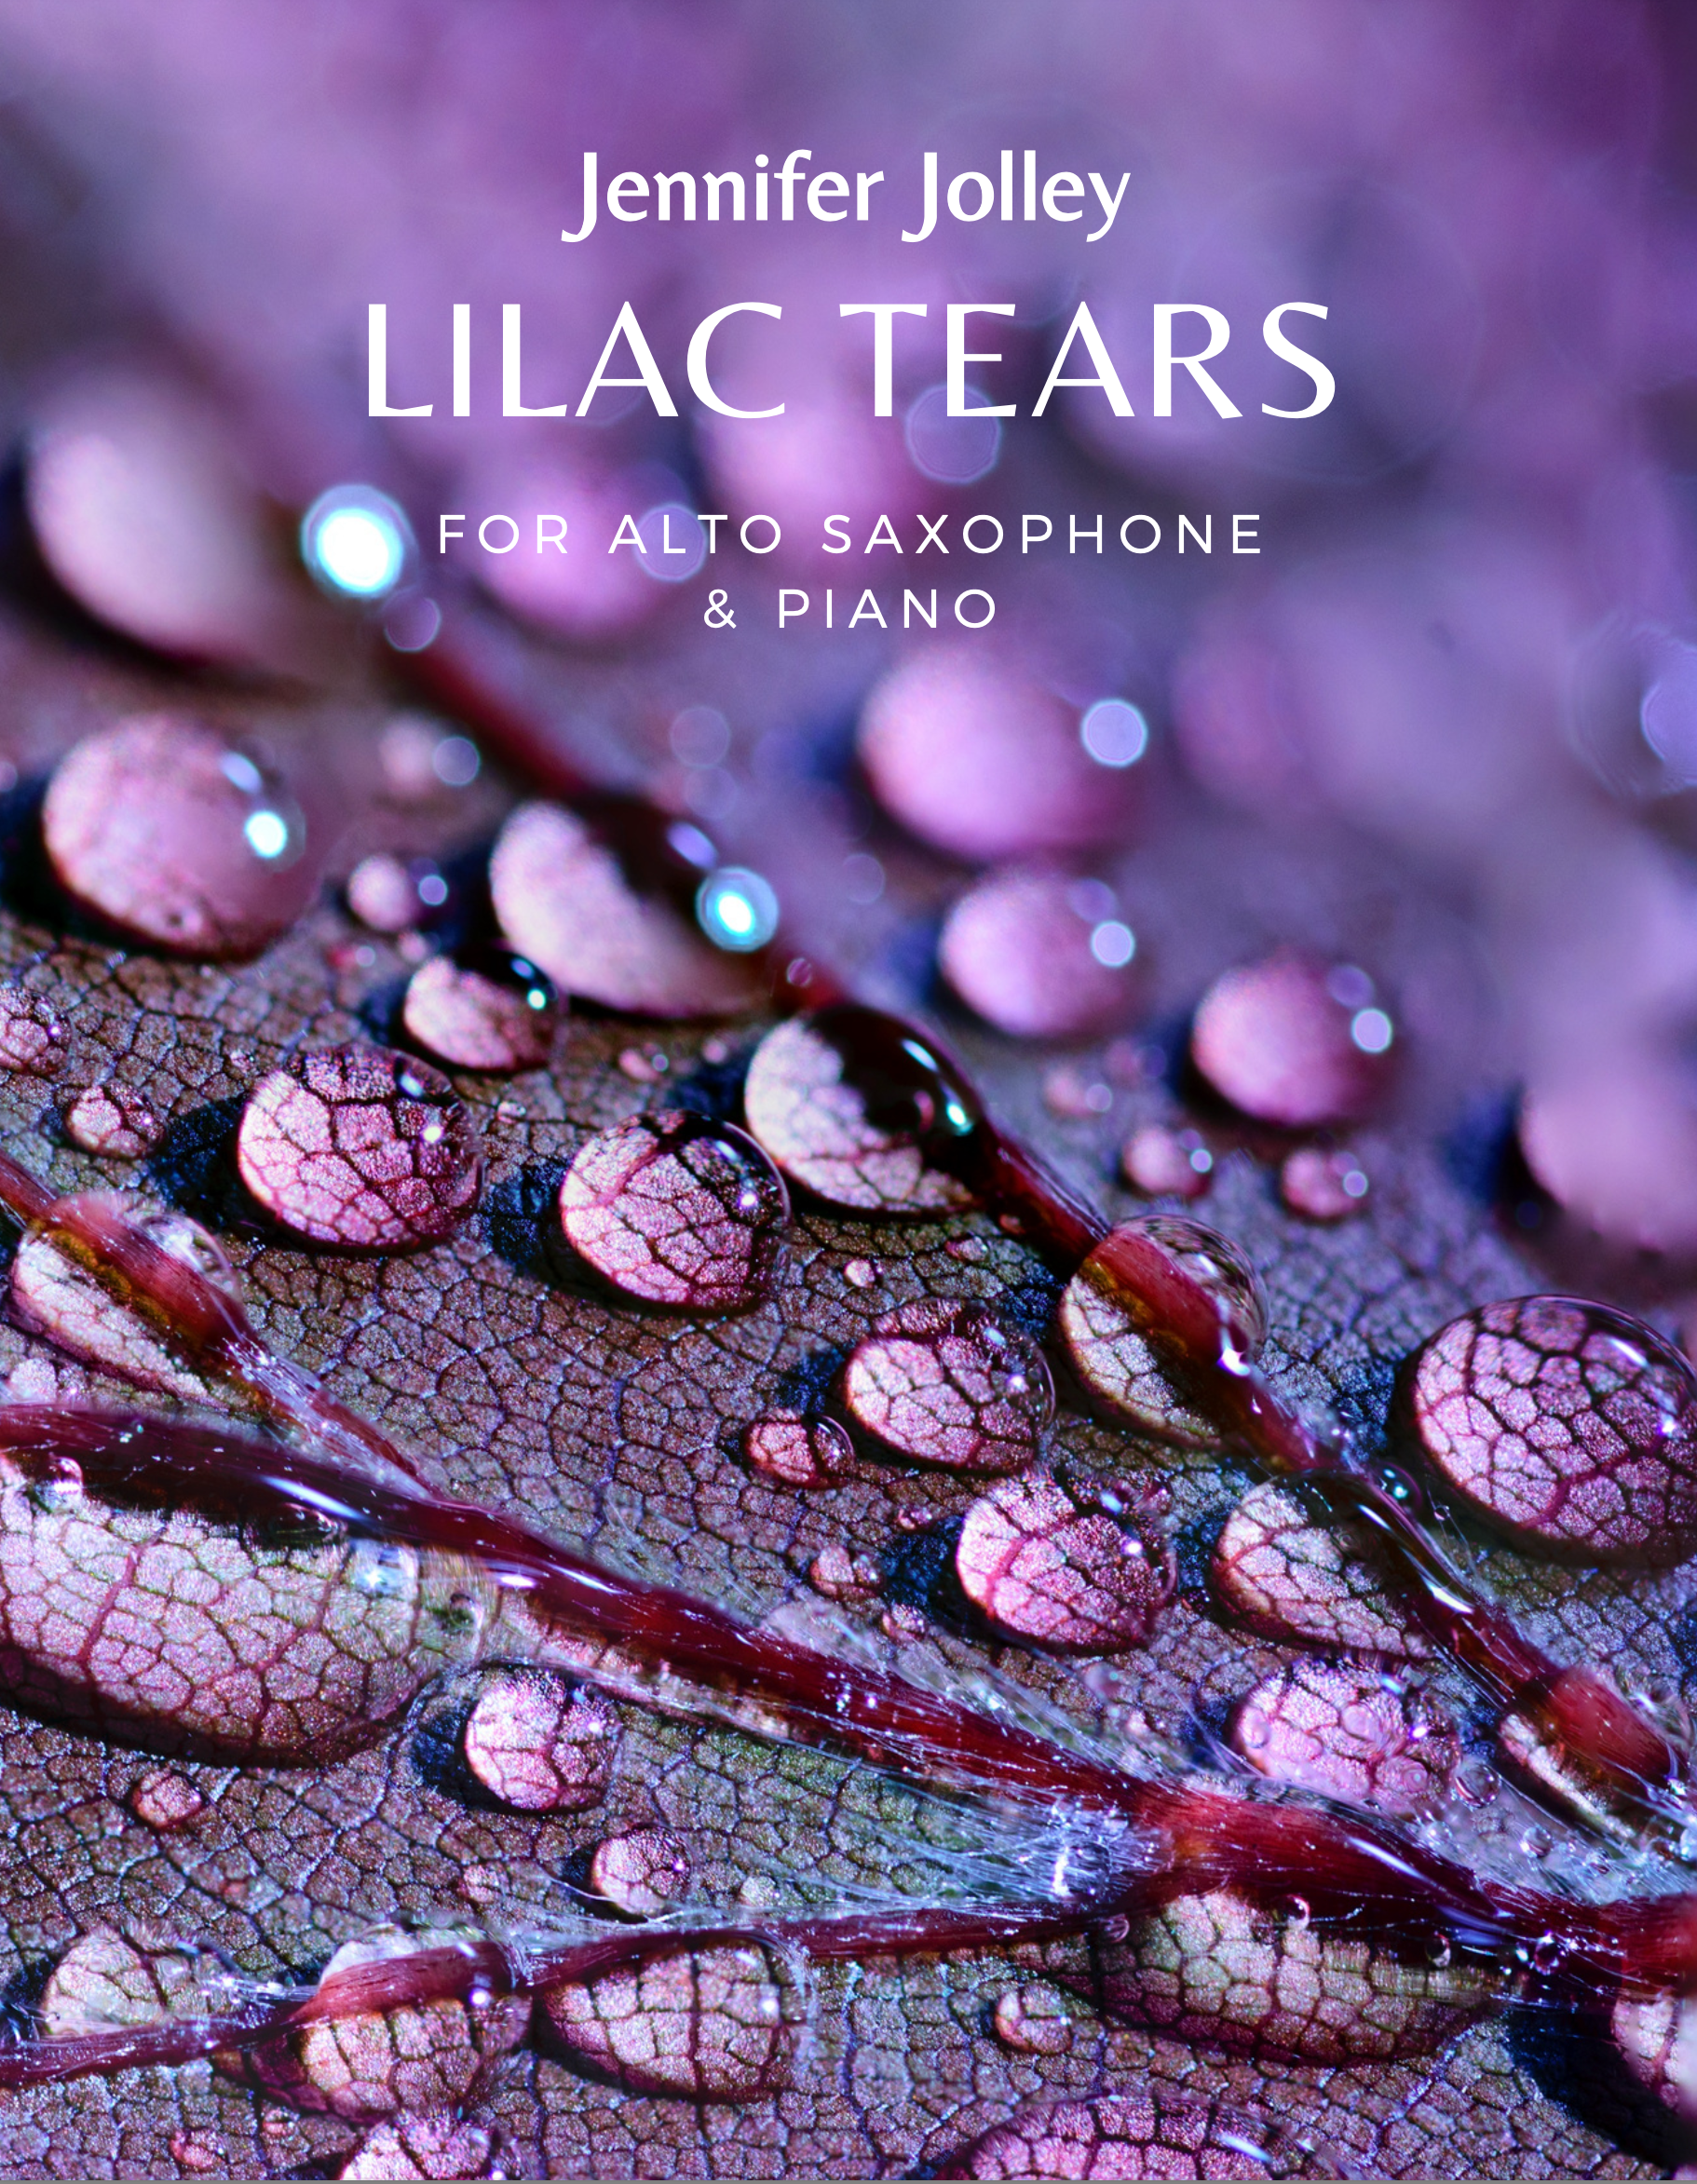 Lilac Tears by Jennifer Jolley